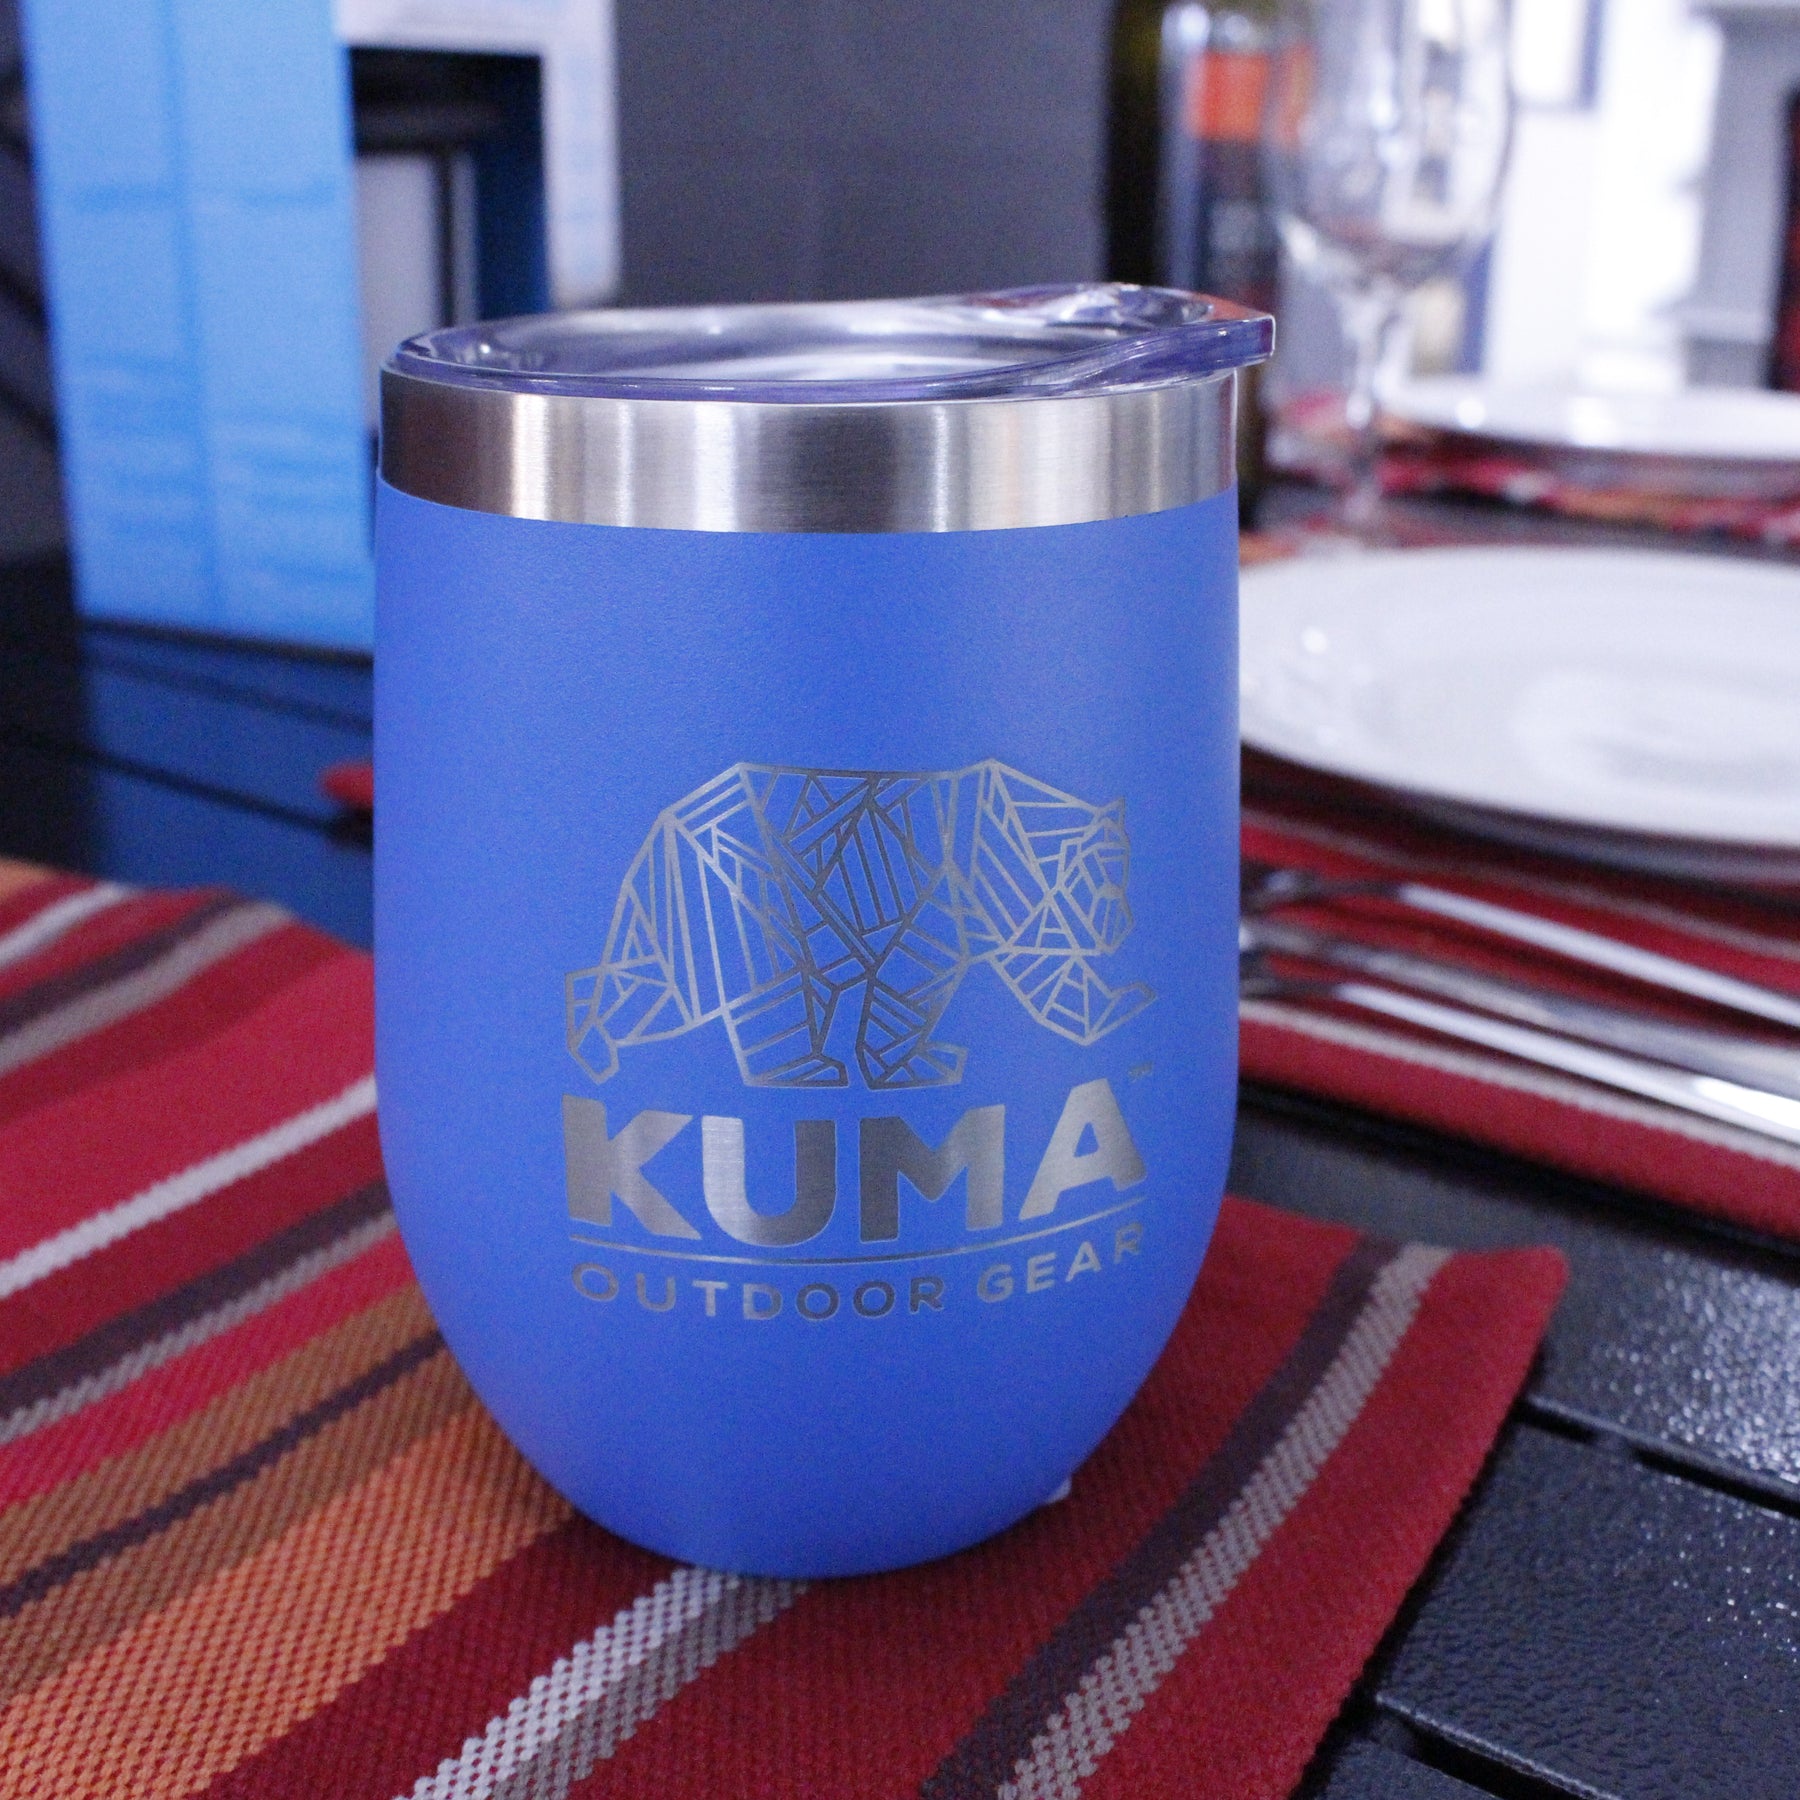 Kuma Wine tumbler